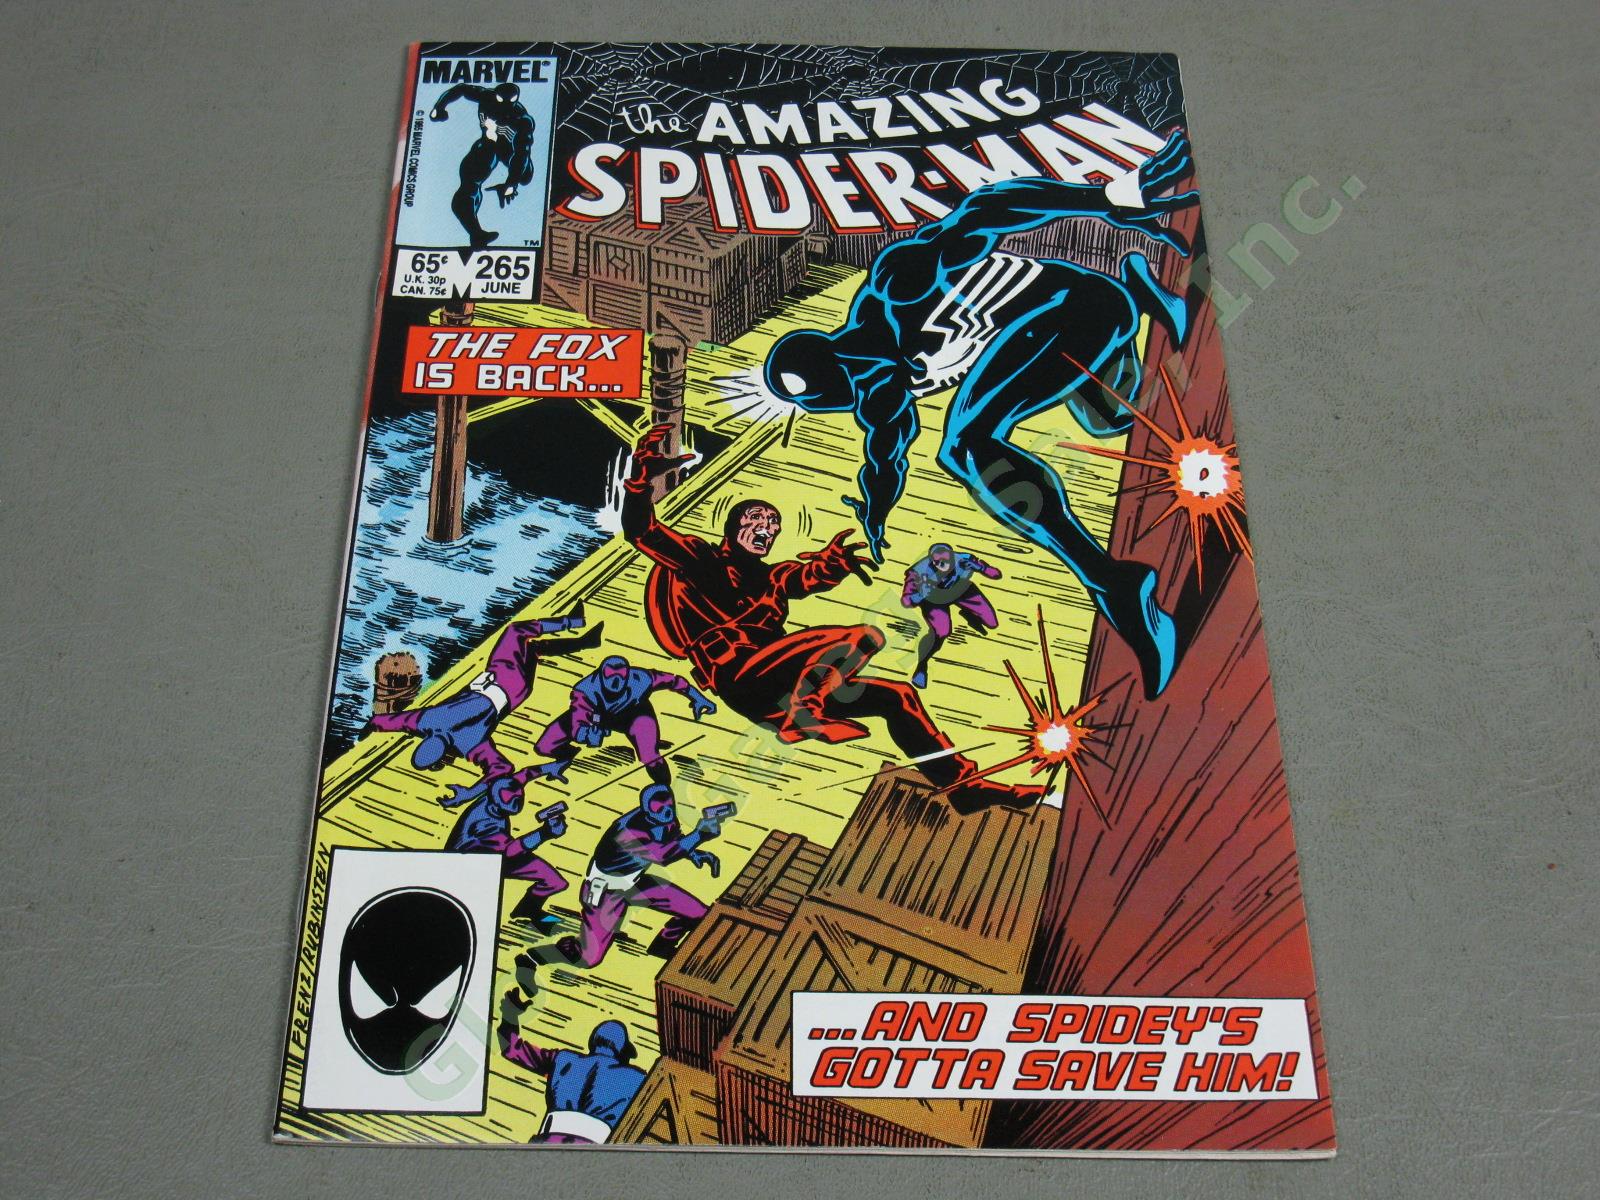 124 Marvel Amazing Spiderman Lot Runs 171-297 329-332 #265 1st App Silver Sable! 11